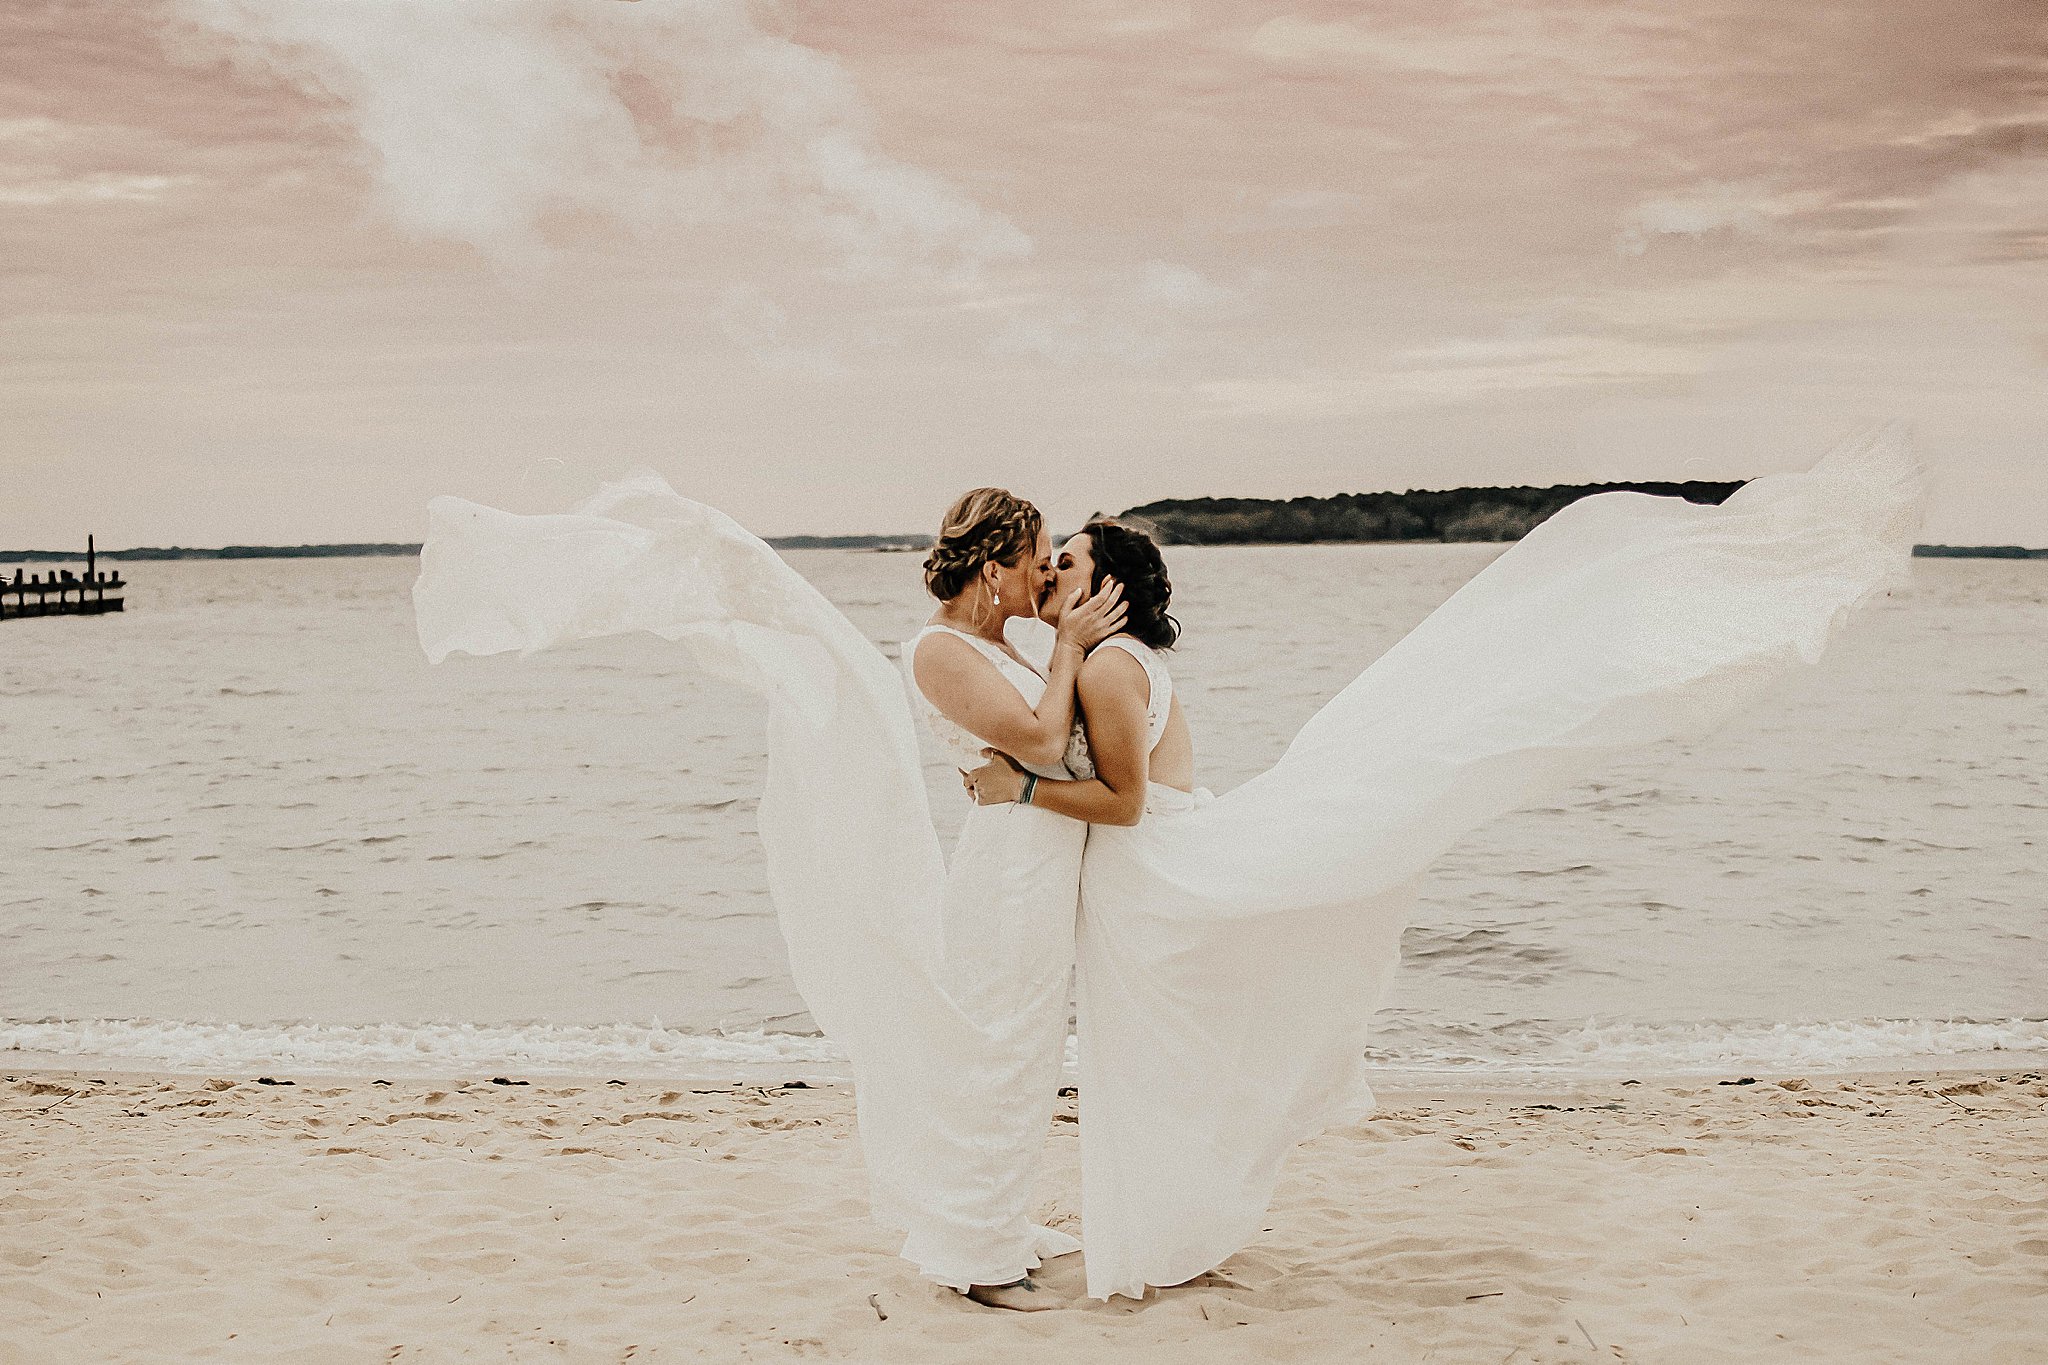 dewey beach wedding captured by delaware county photographer brey photo